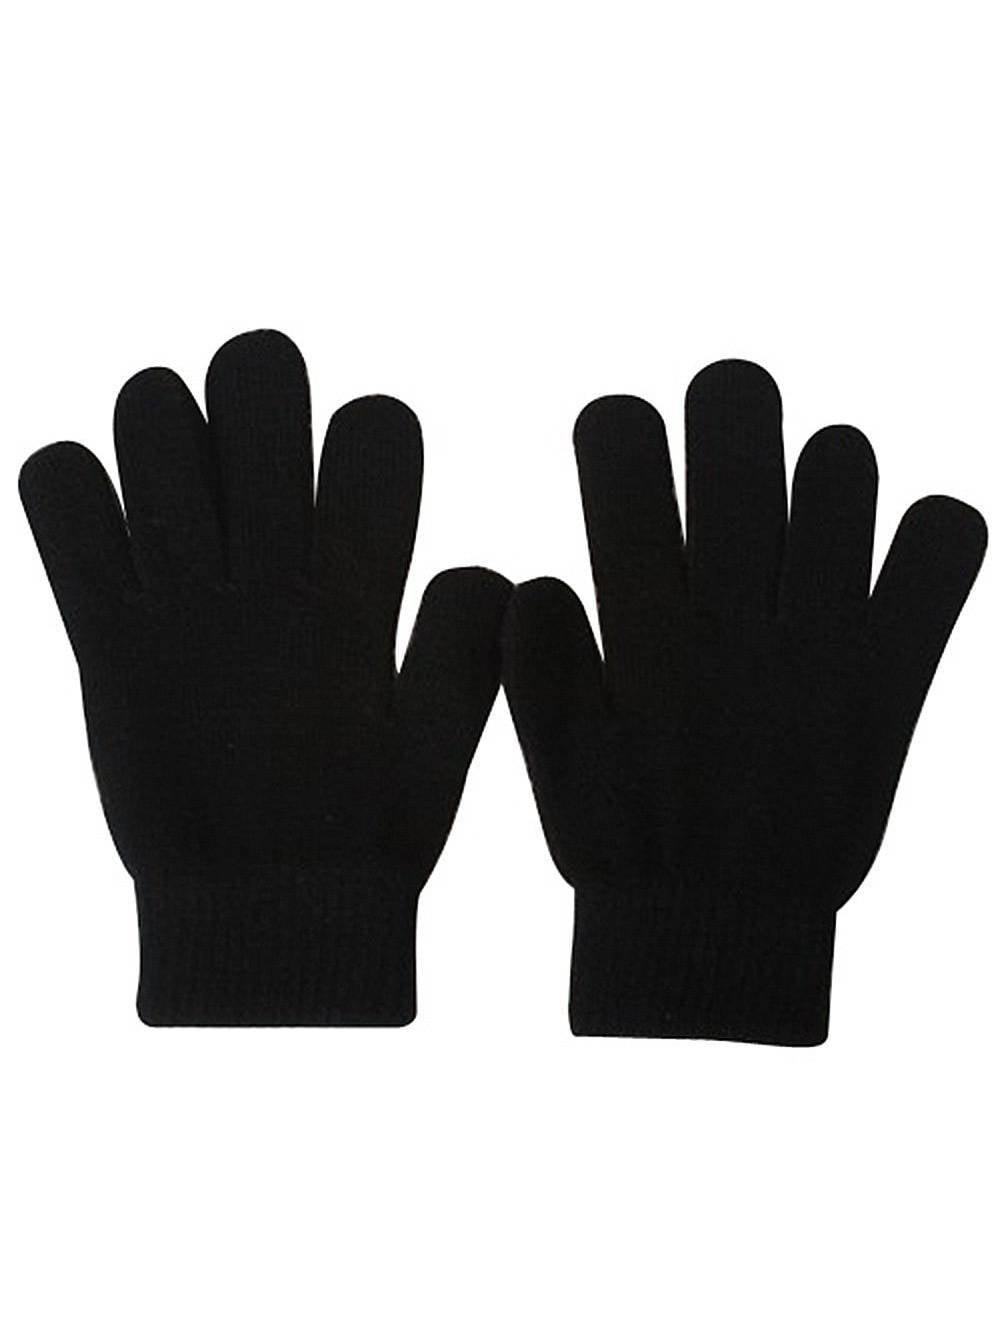 Pair Magic Gloves Stretch Winter Mens Black Ladies Womens Warm Soft Full Finger 